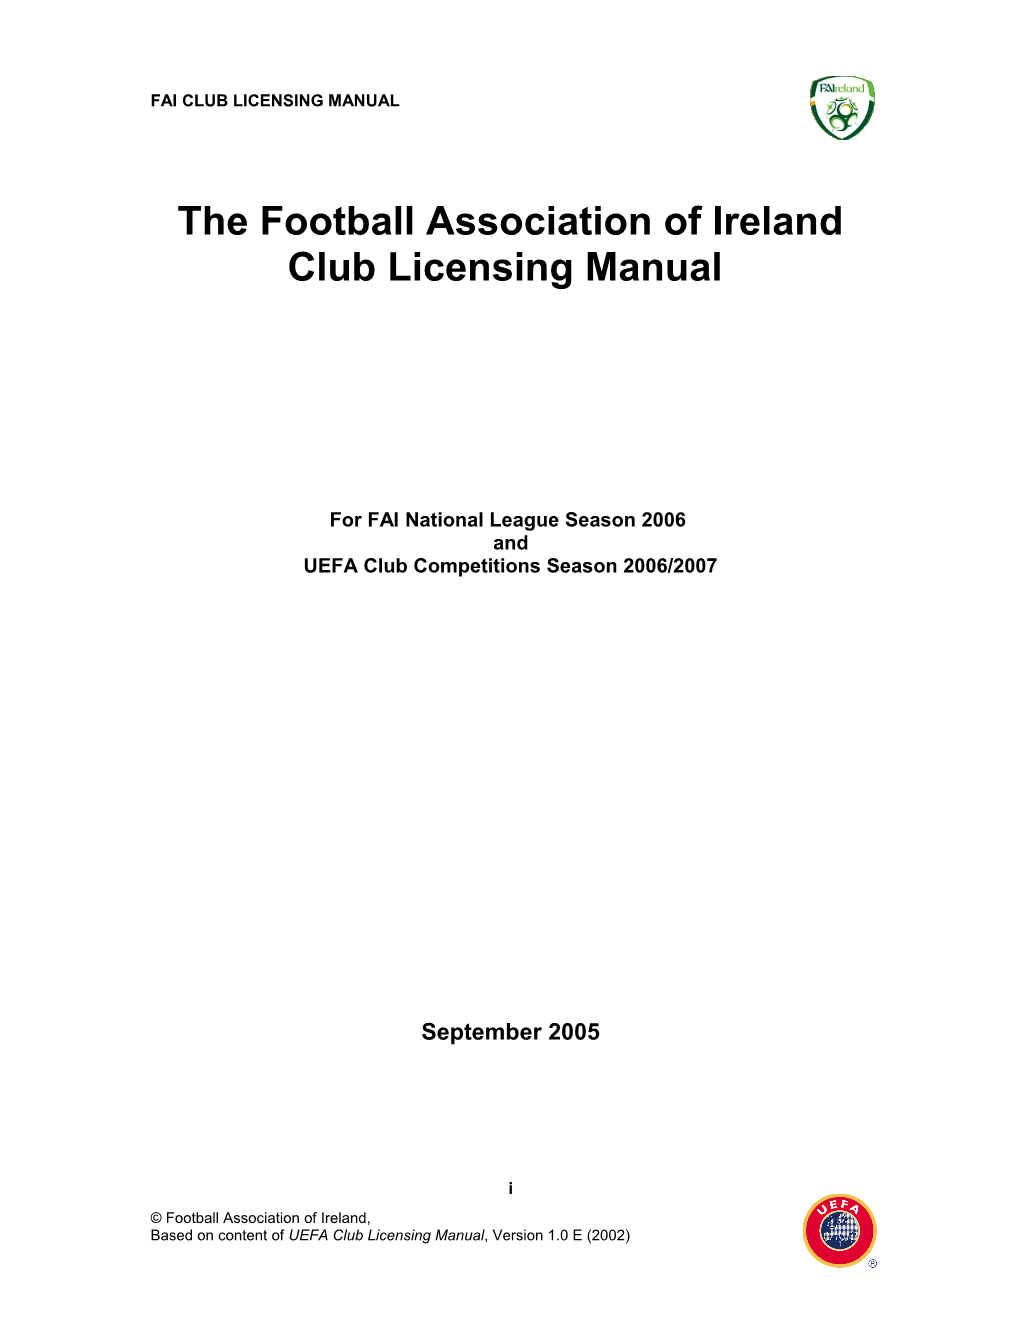 The Football Association of Ireland Club Licensing Manual 2005